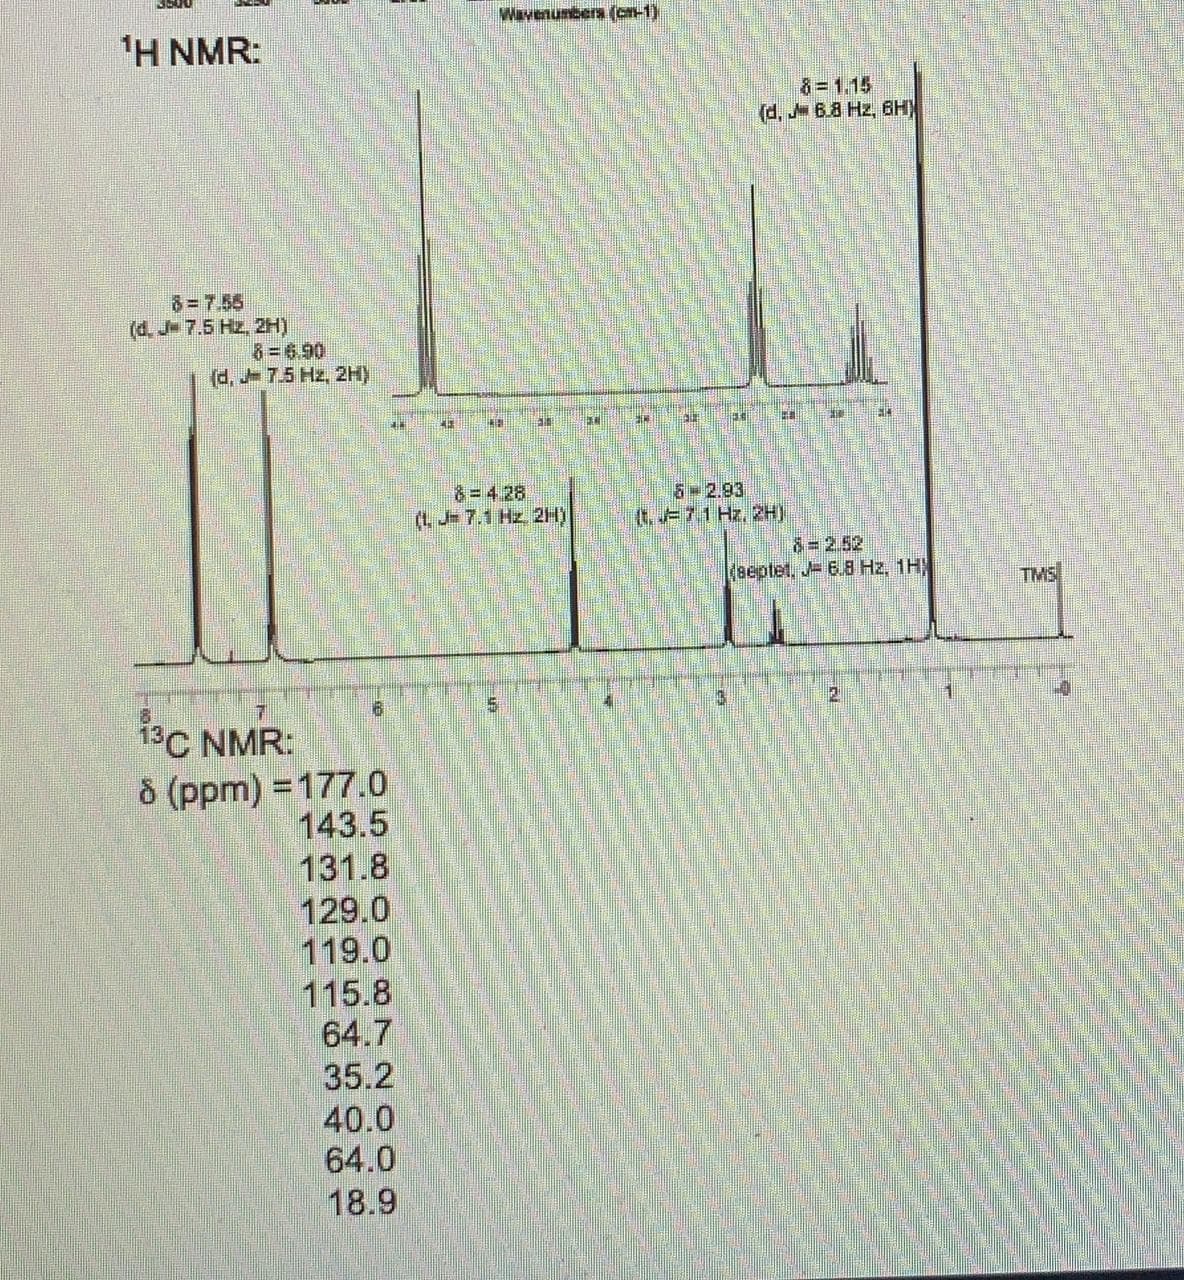 Wavenumbers (en-1)
'H NMR:
8=1.15
(d, 6.8 Hz, 6H)
8=7.55
(d. J 7.5 Hz, 2H)
8=6.90
(d, 7.5 Hz, 2H)
&= 4.28
(L. J 7.1 Hz 2H)
6-2.93
(t. 7,1 Hz, 2H)
8=2.52
(septet, J 6.8 Hz, 1H
TMS
5.
1%C NMR:
8 (ppm) = 177.0
143.5
131.8
129.0
119.0
115.8
64.7
35.2
40.0
64.0
18.9
